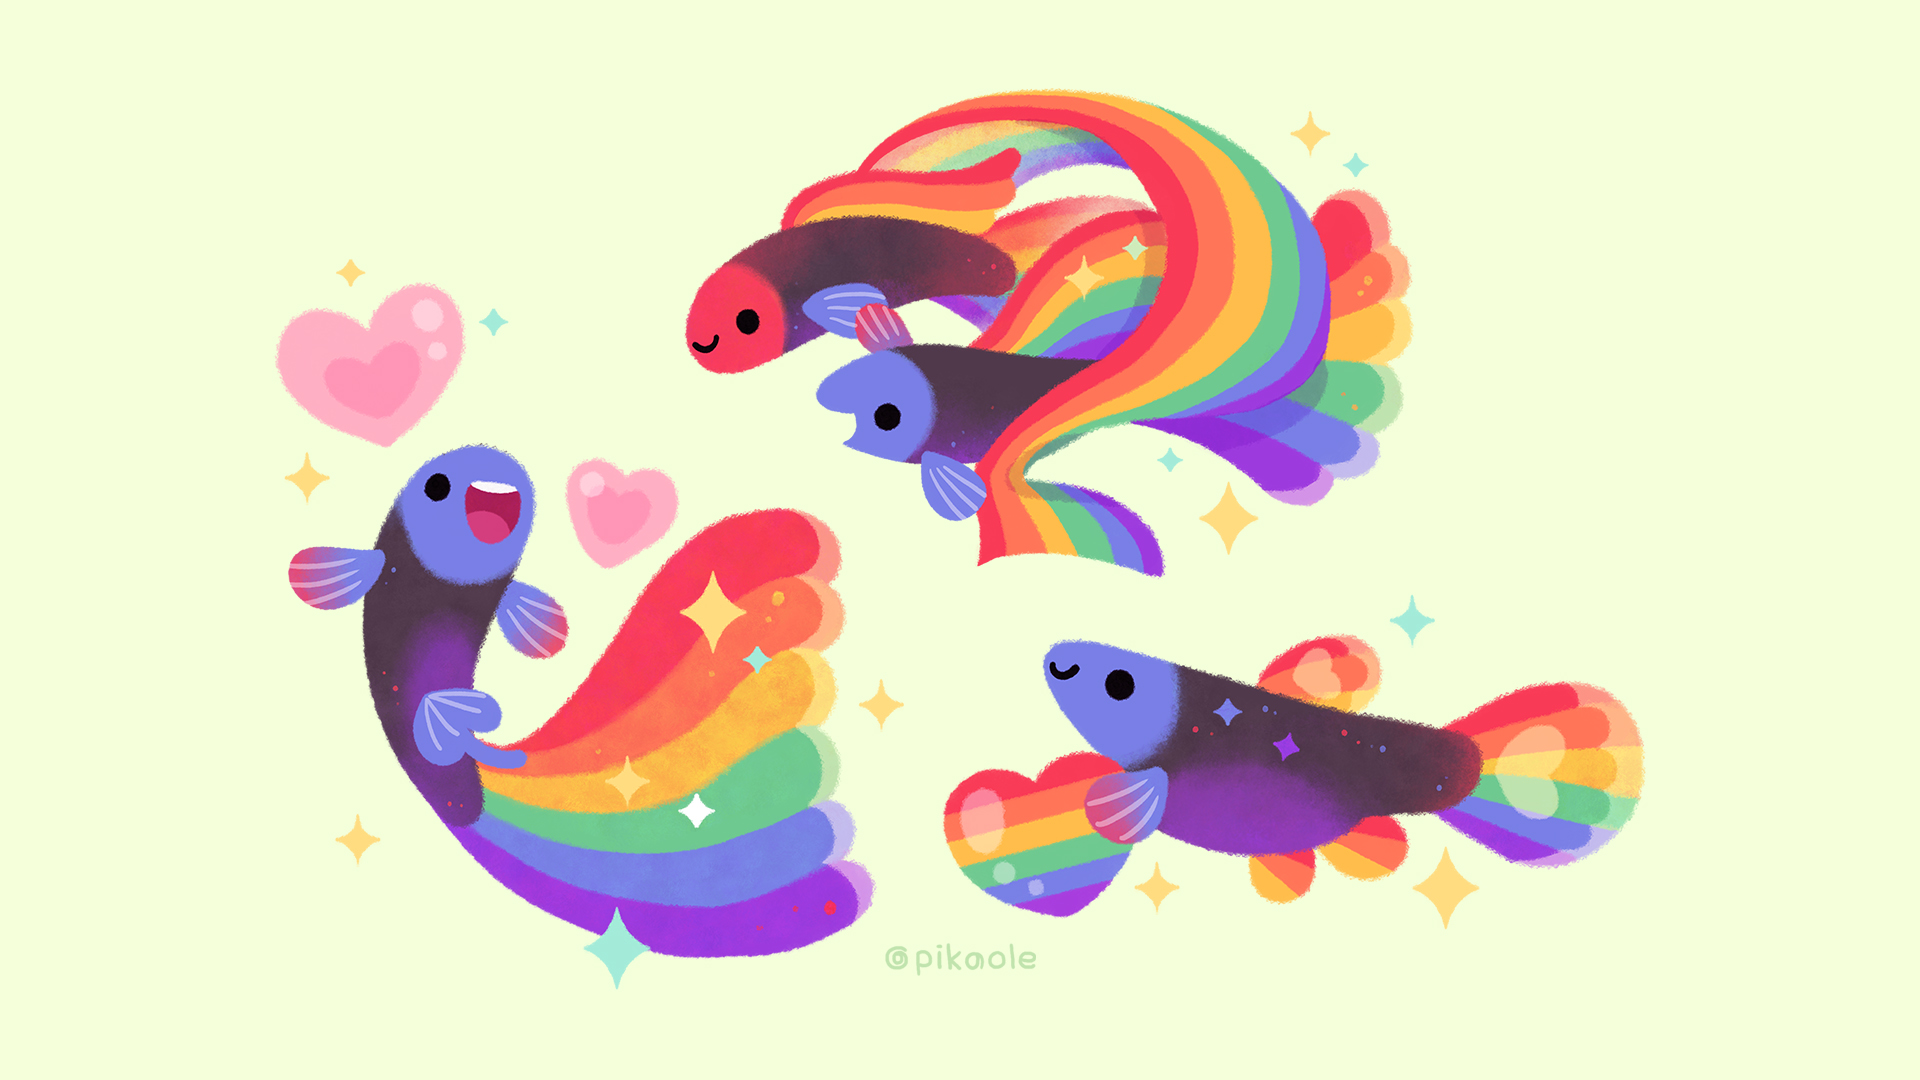 Rainbow Guppy wallpaper by pikaole on DeviantArt